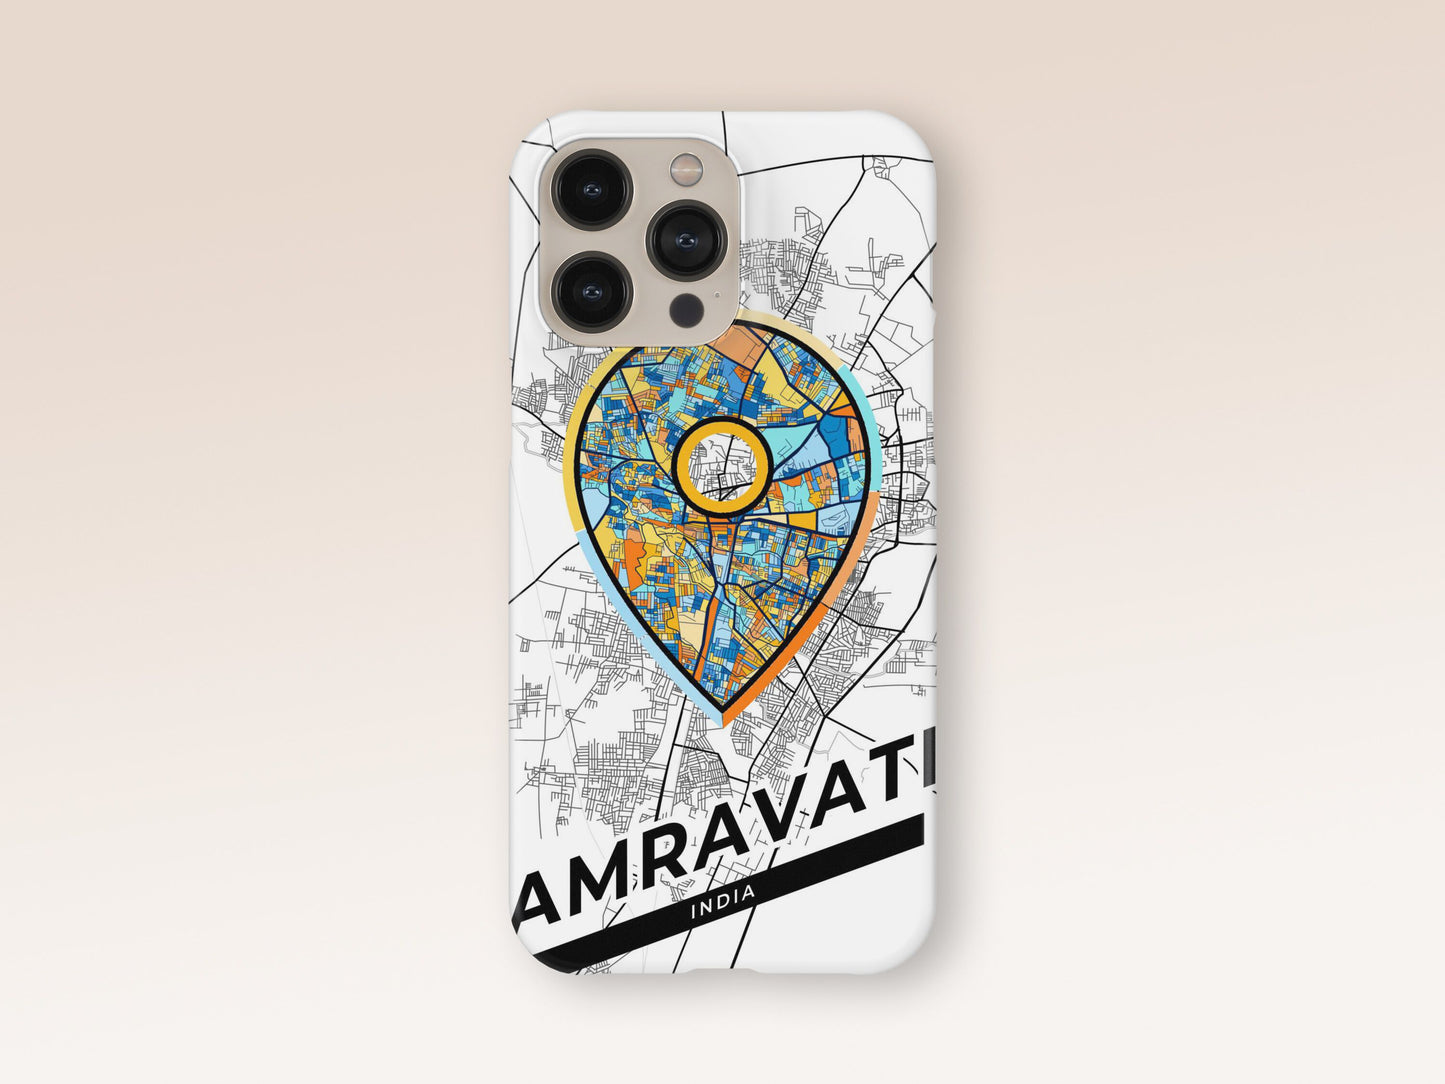 Amravati India slim phone case with colorful icon. Birthday, wedding or housewarming gift. Couple match cases. 1